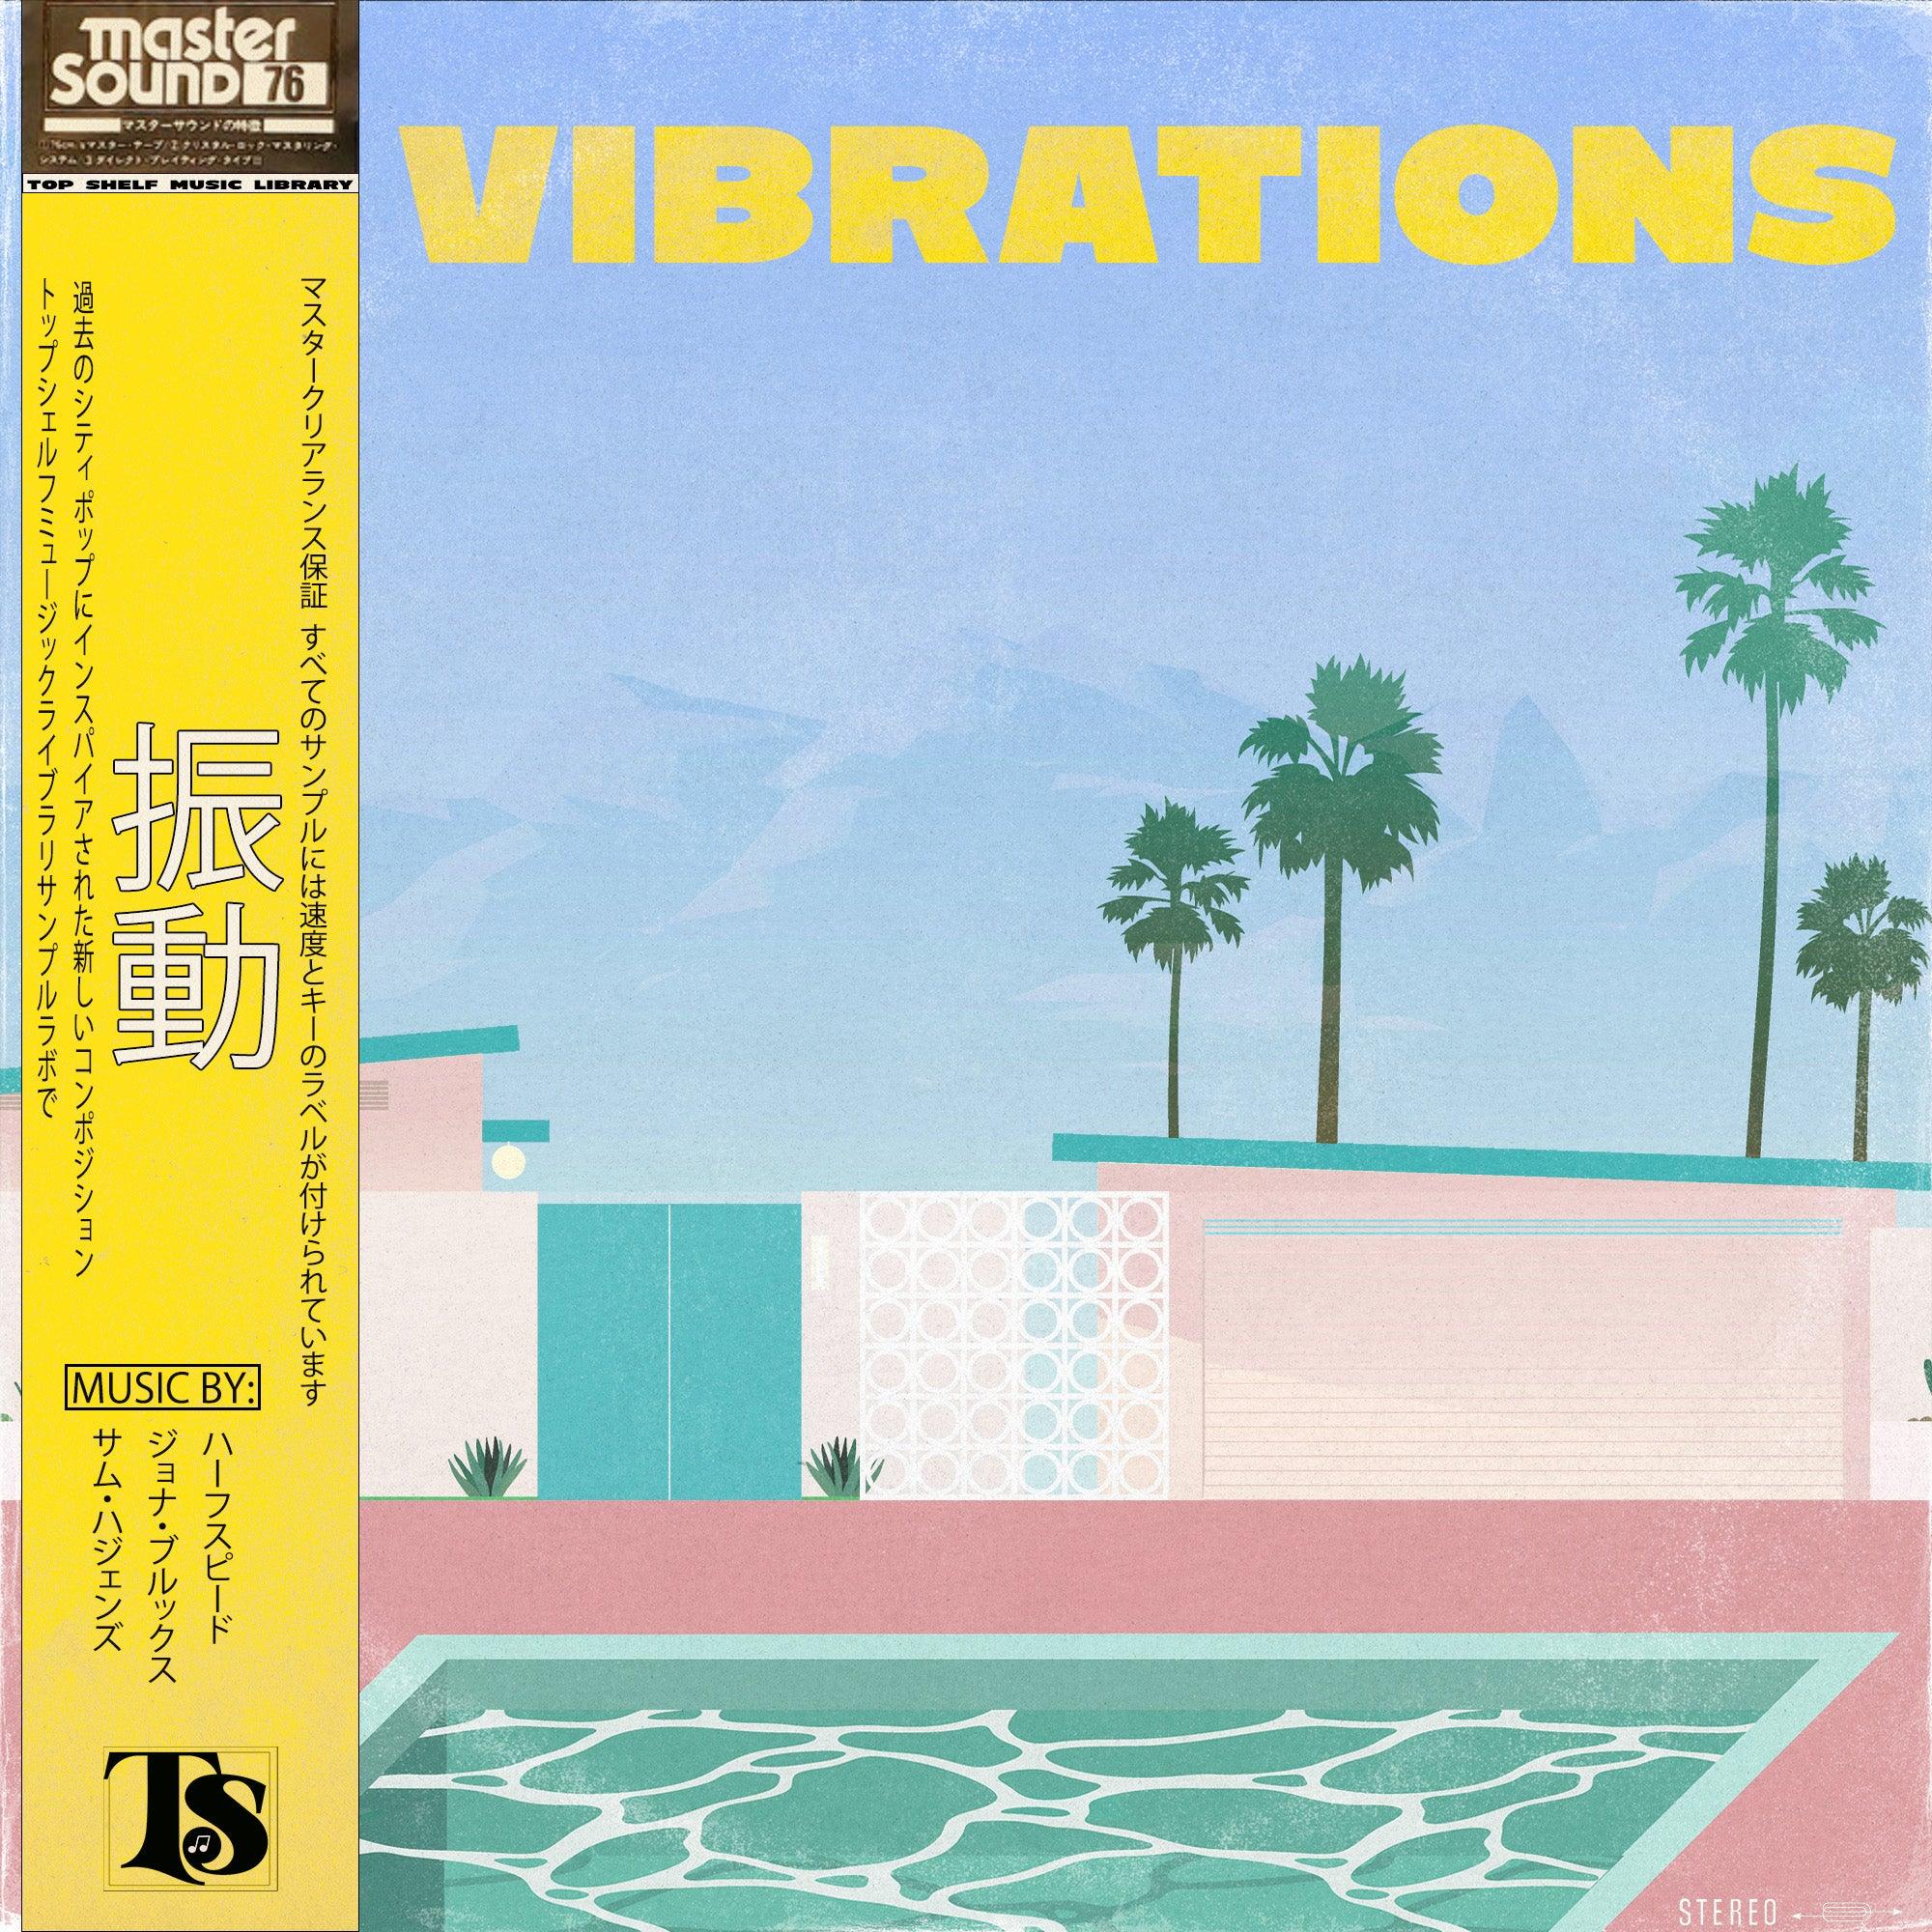 Vibrations - The Sample Lab